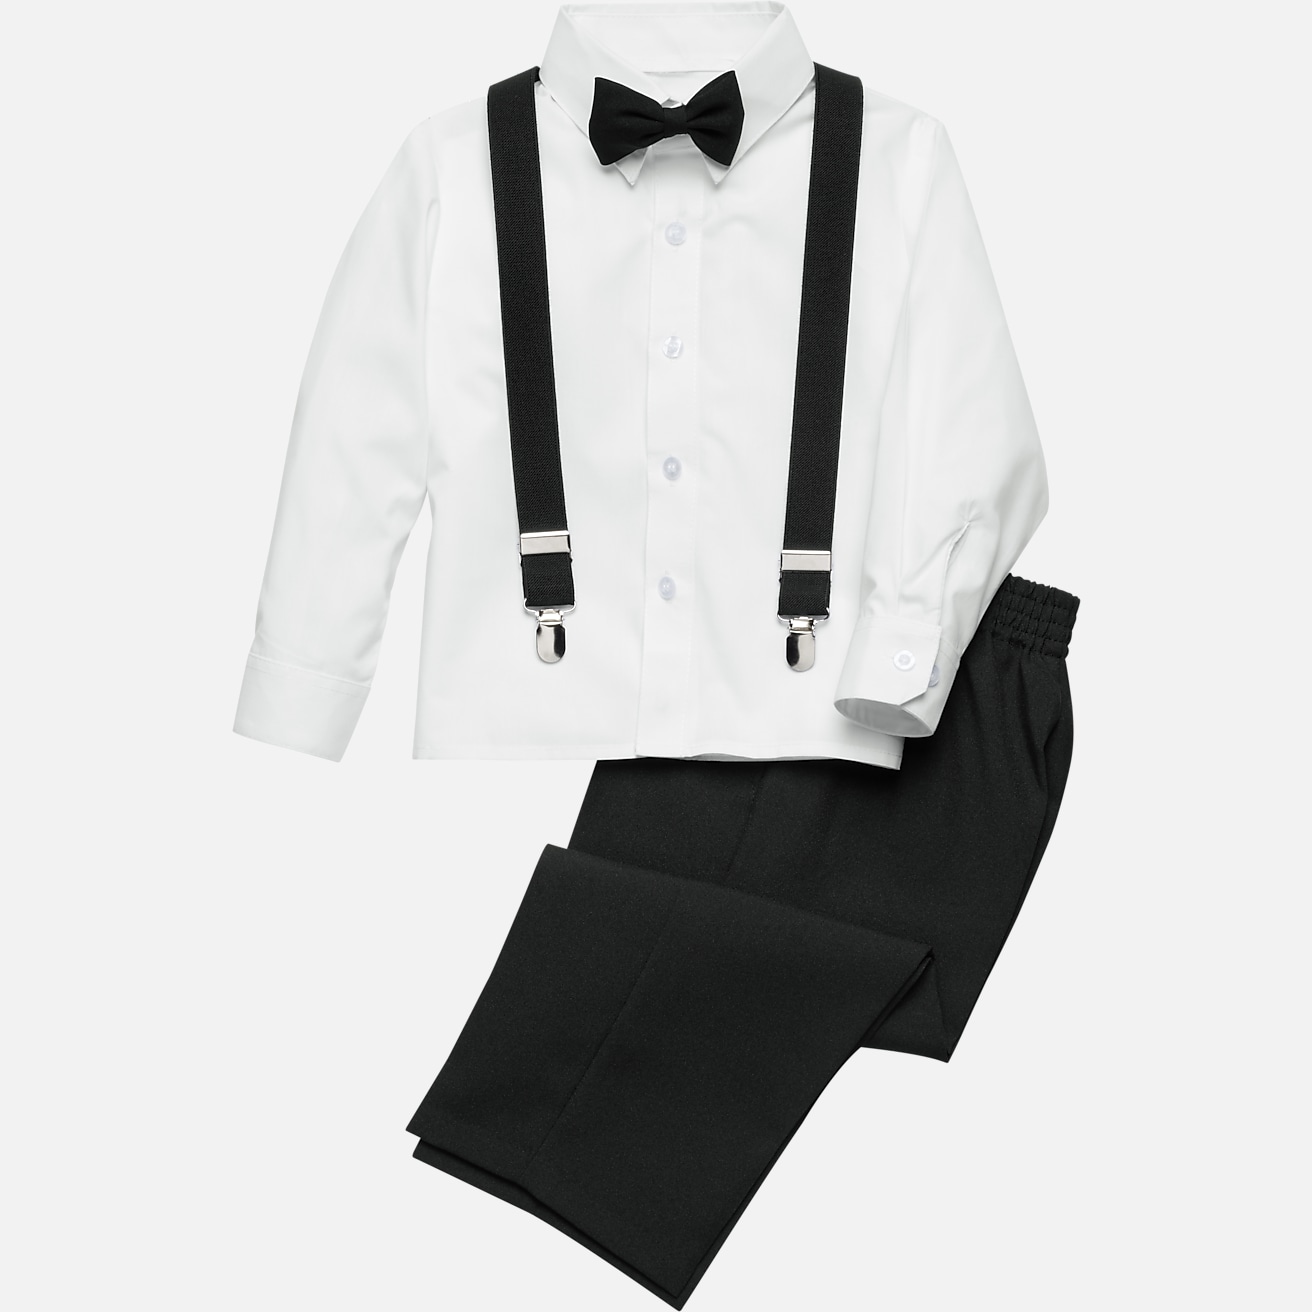 Summer Matching Pants Set For Little Girls: Black Suspenders Top